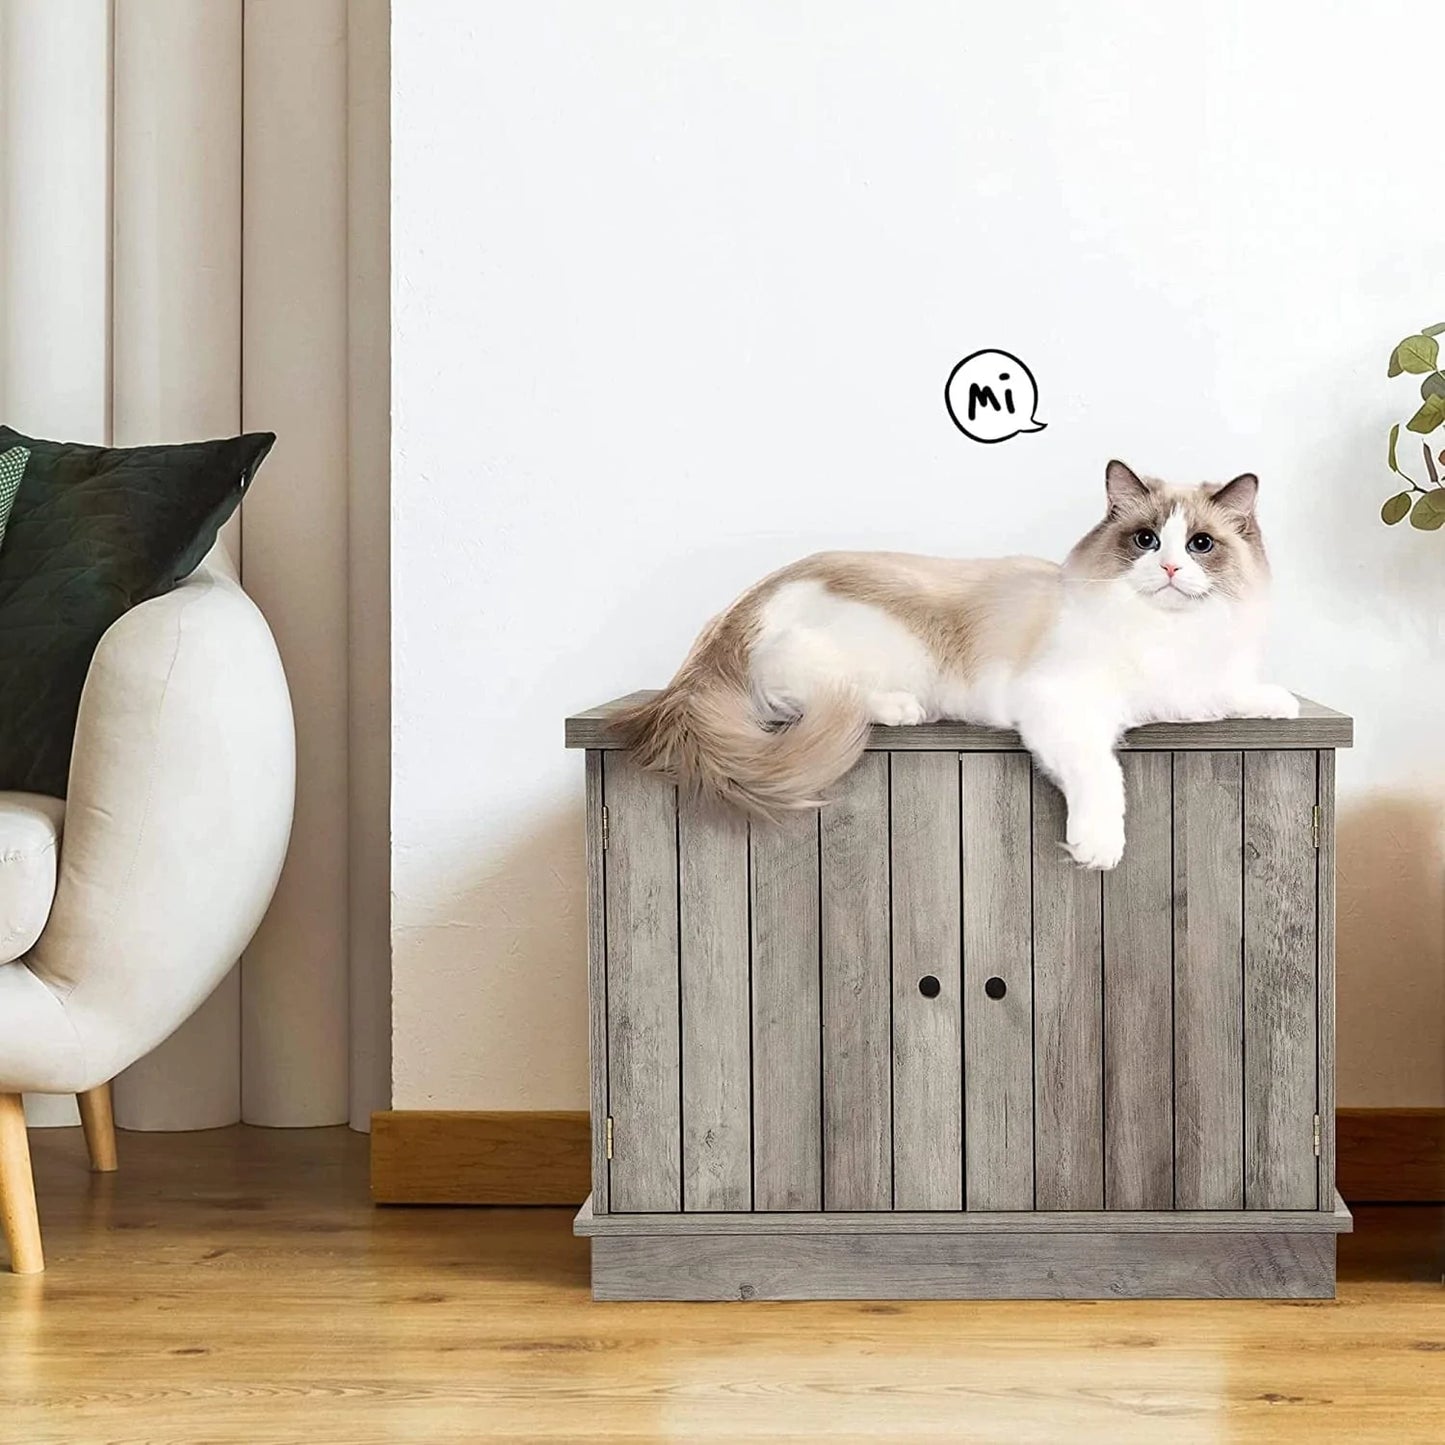 Coromose Double-Door Cat Litter Box Enclosure Cabinet, Wooden Cat House Bench Furniture